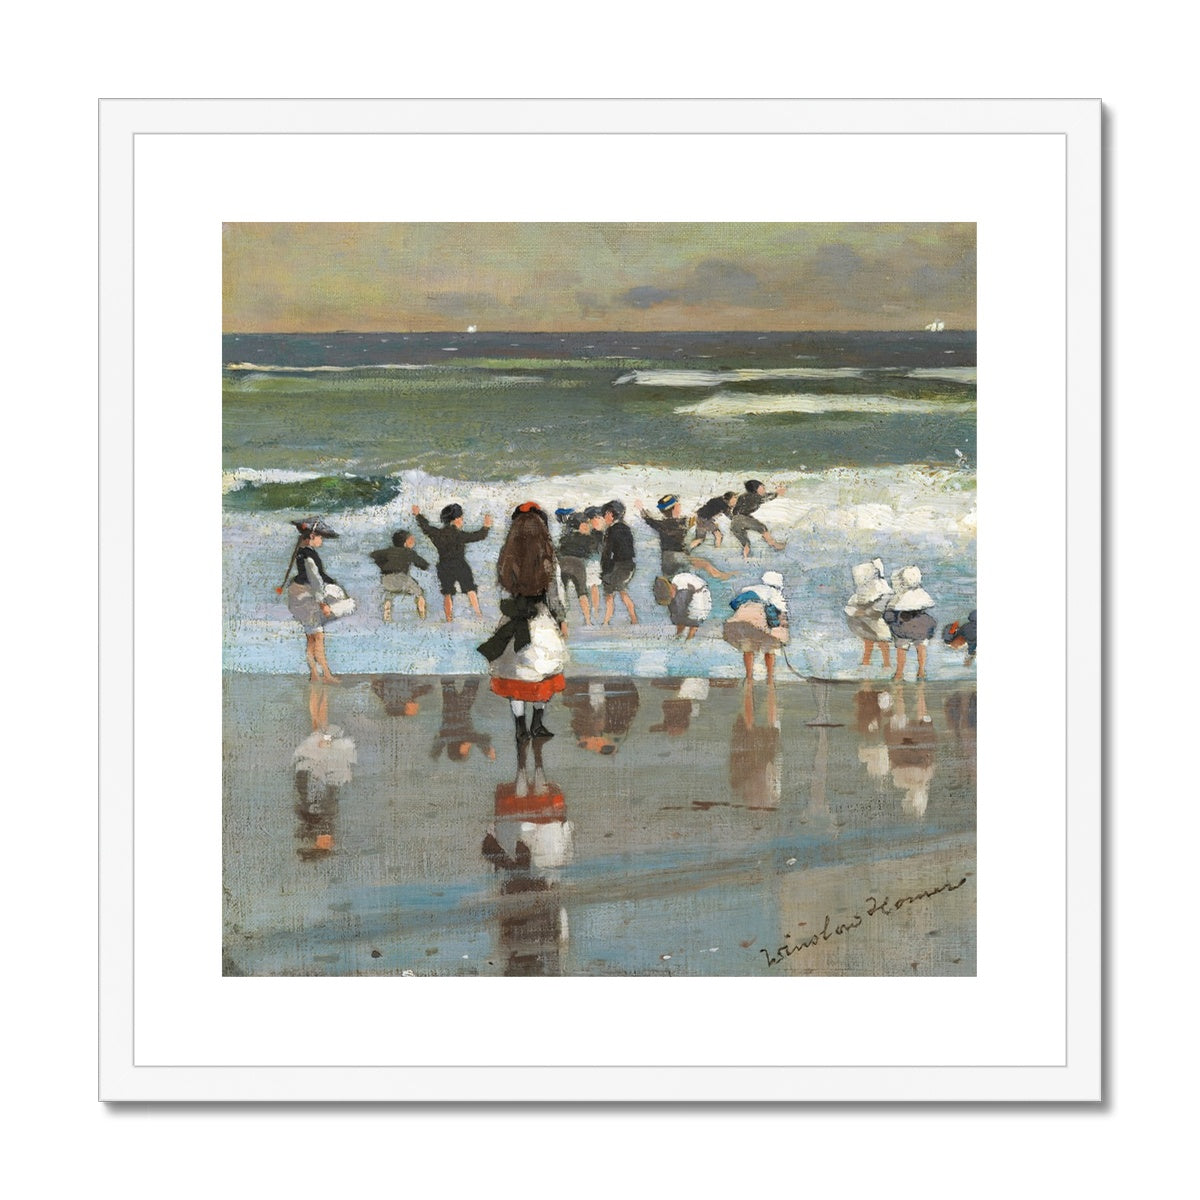 Winslow Homer Framed Open Edition Art Print. 'Beach Scene'. Art Gallery Historic Art